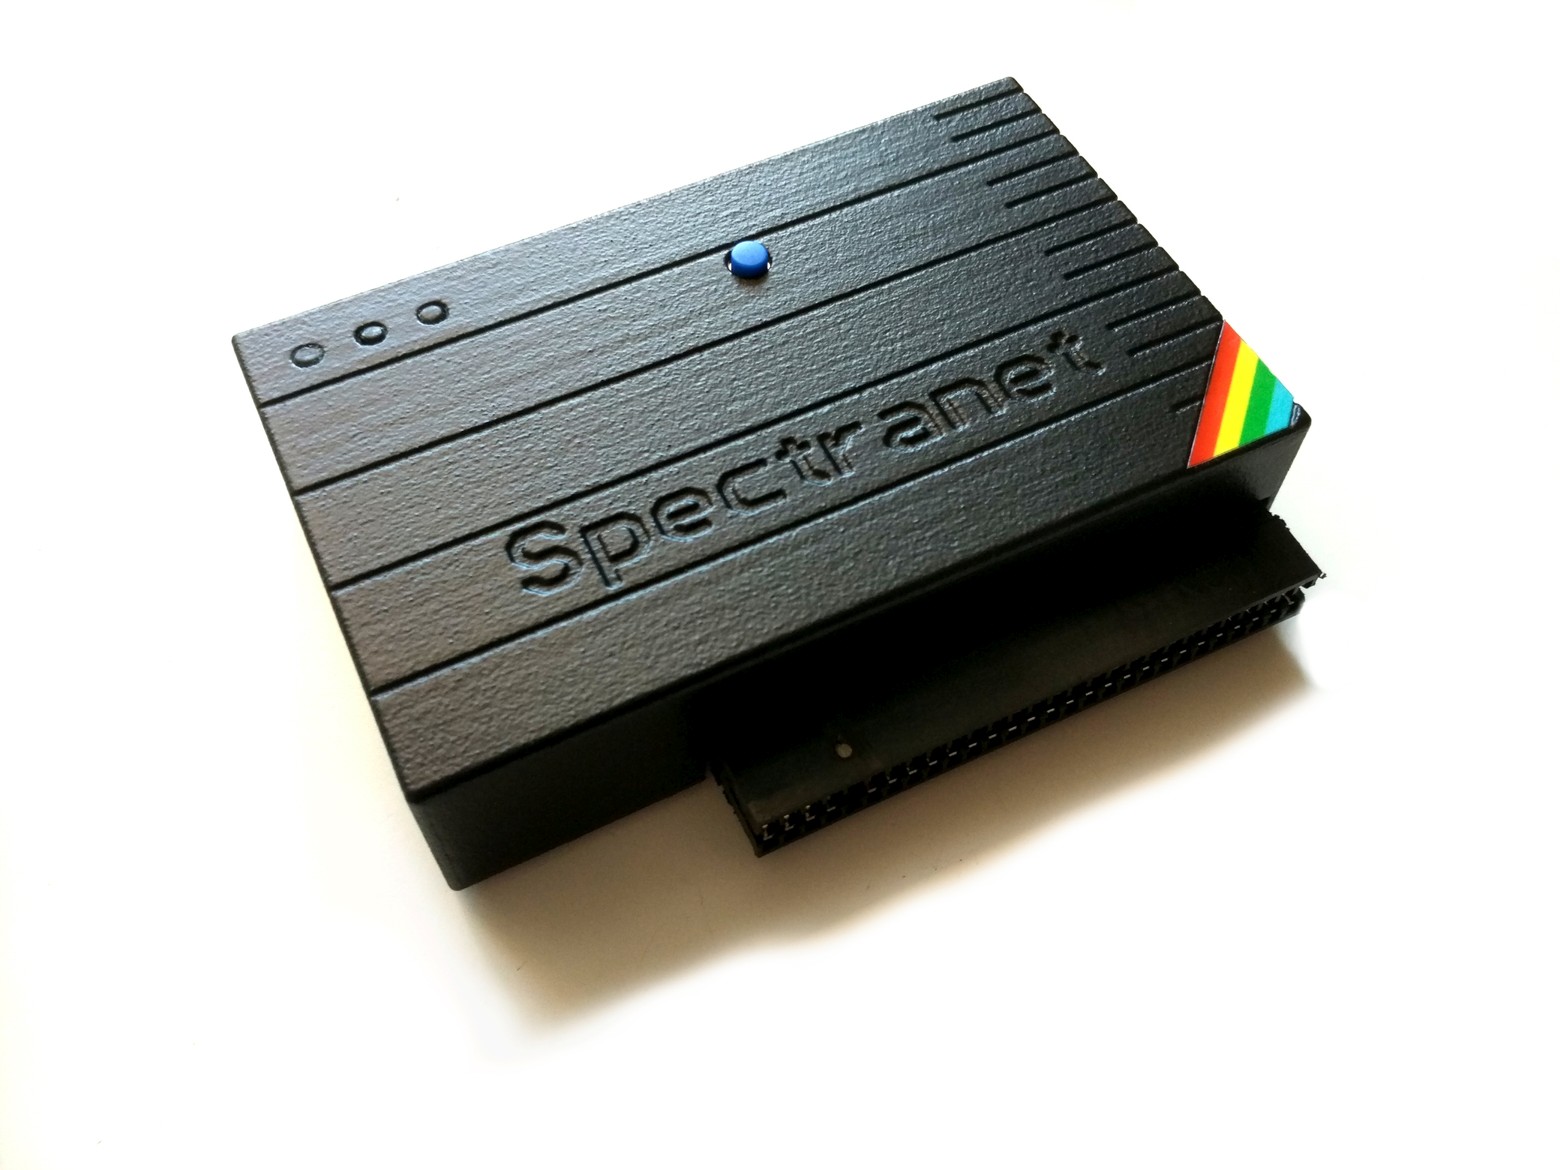 Spectranet image, screenshot or loading screen